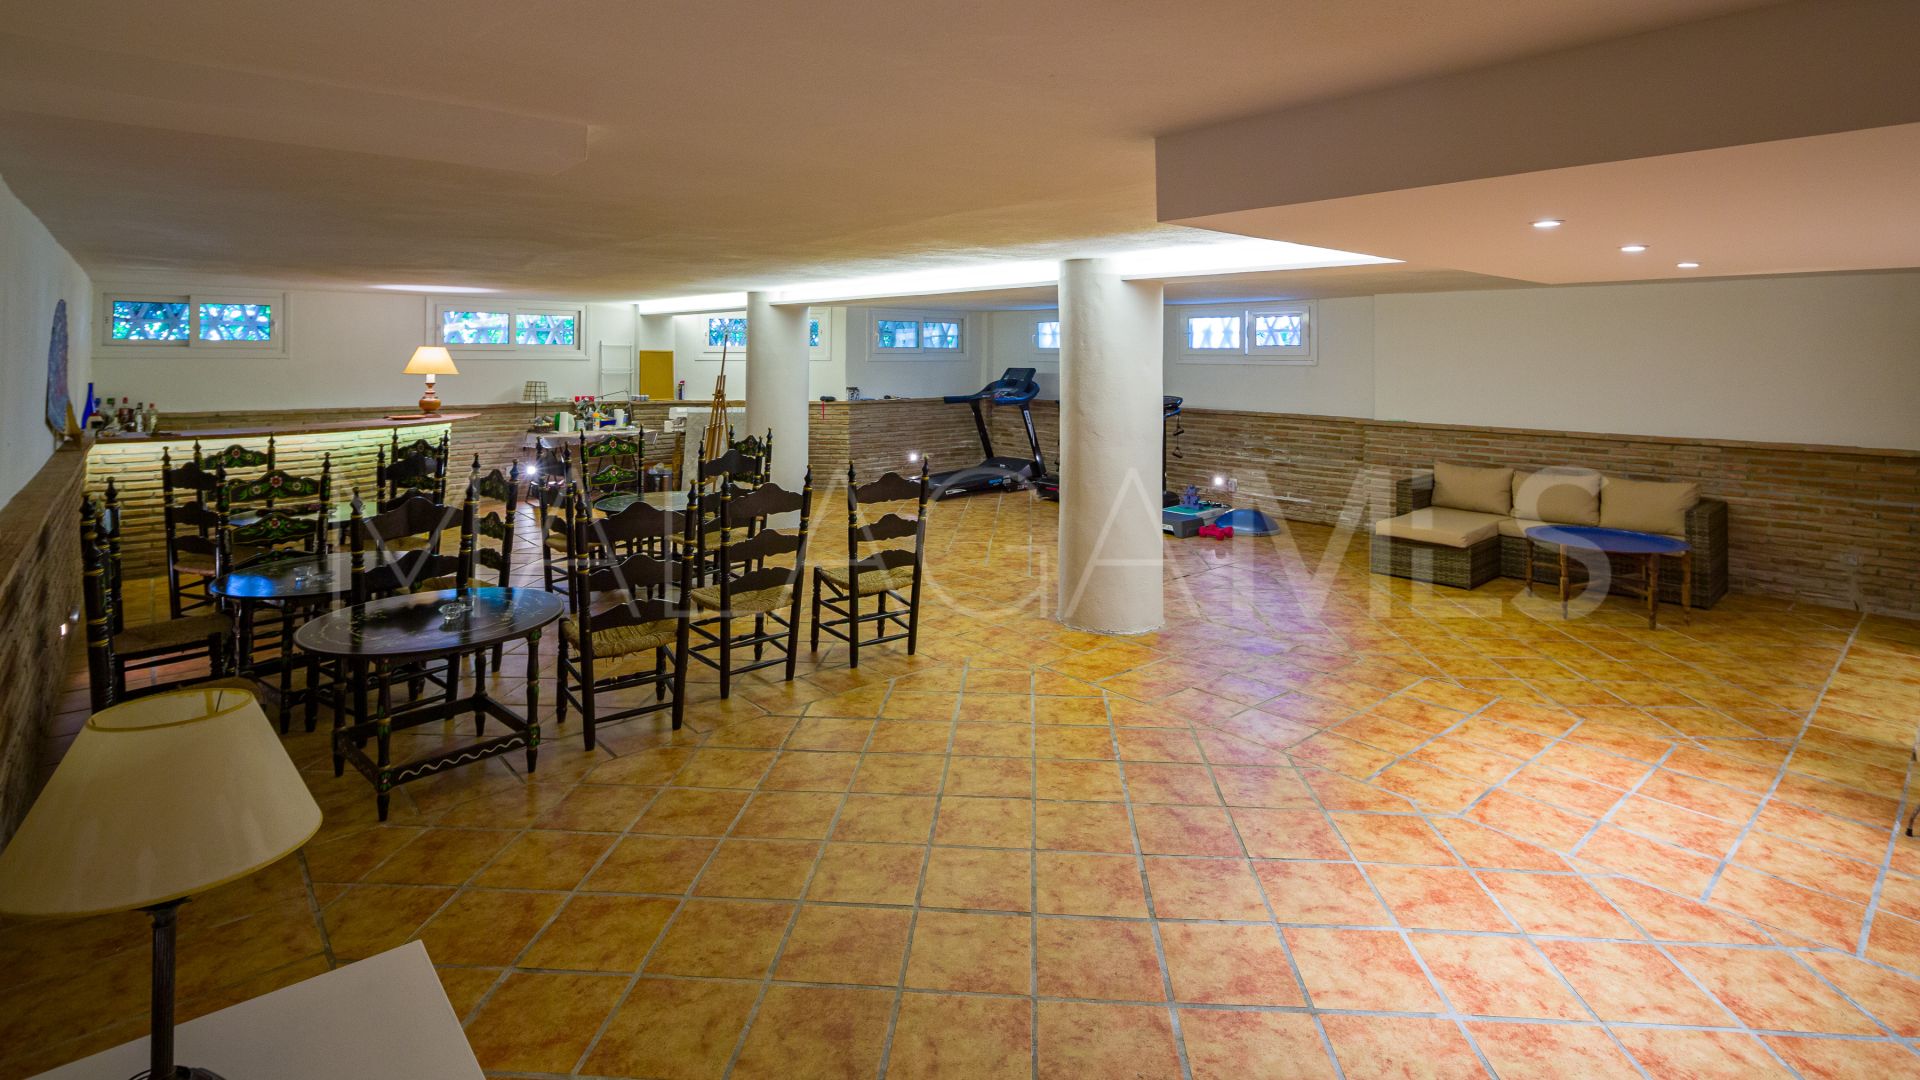 Ground floor duplex for sale in Marbella - Puerto Banus